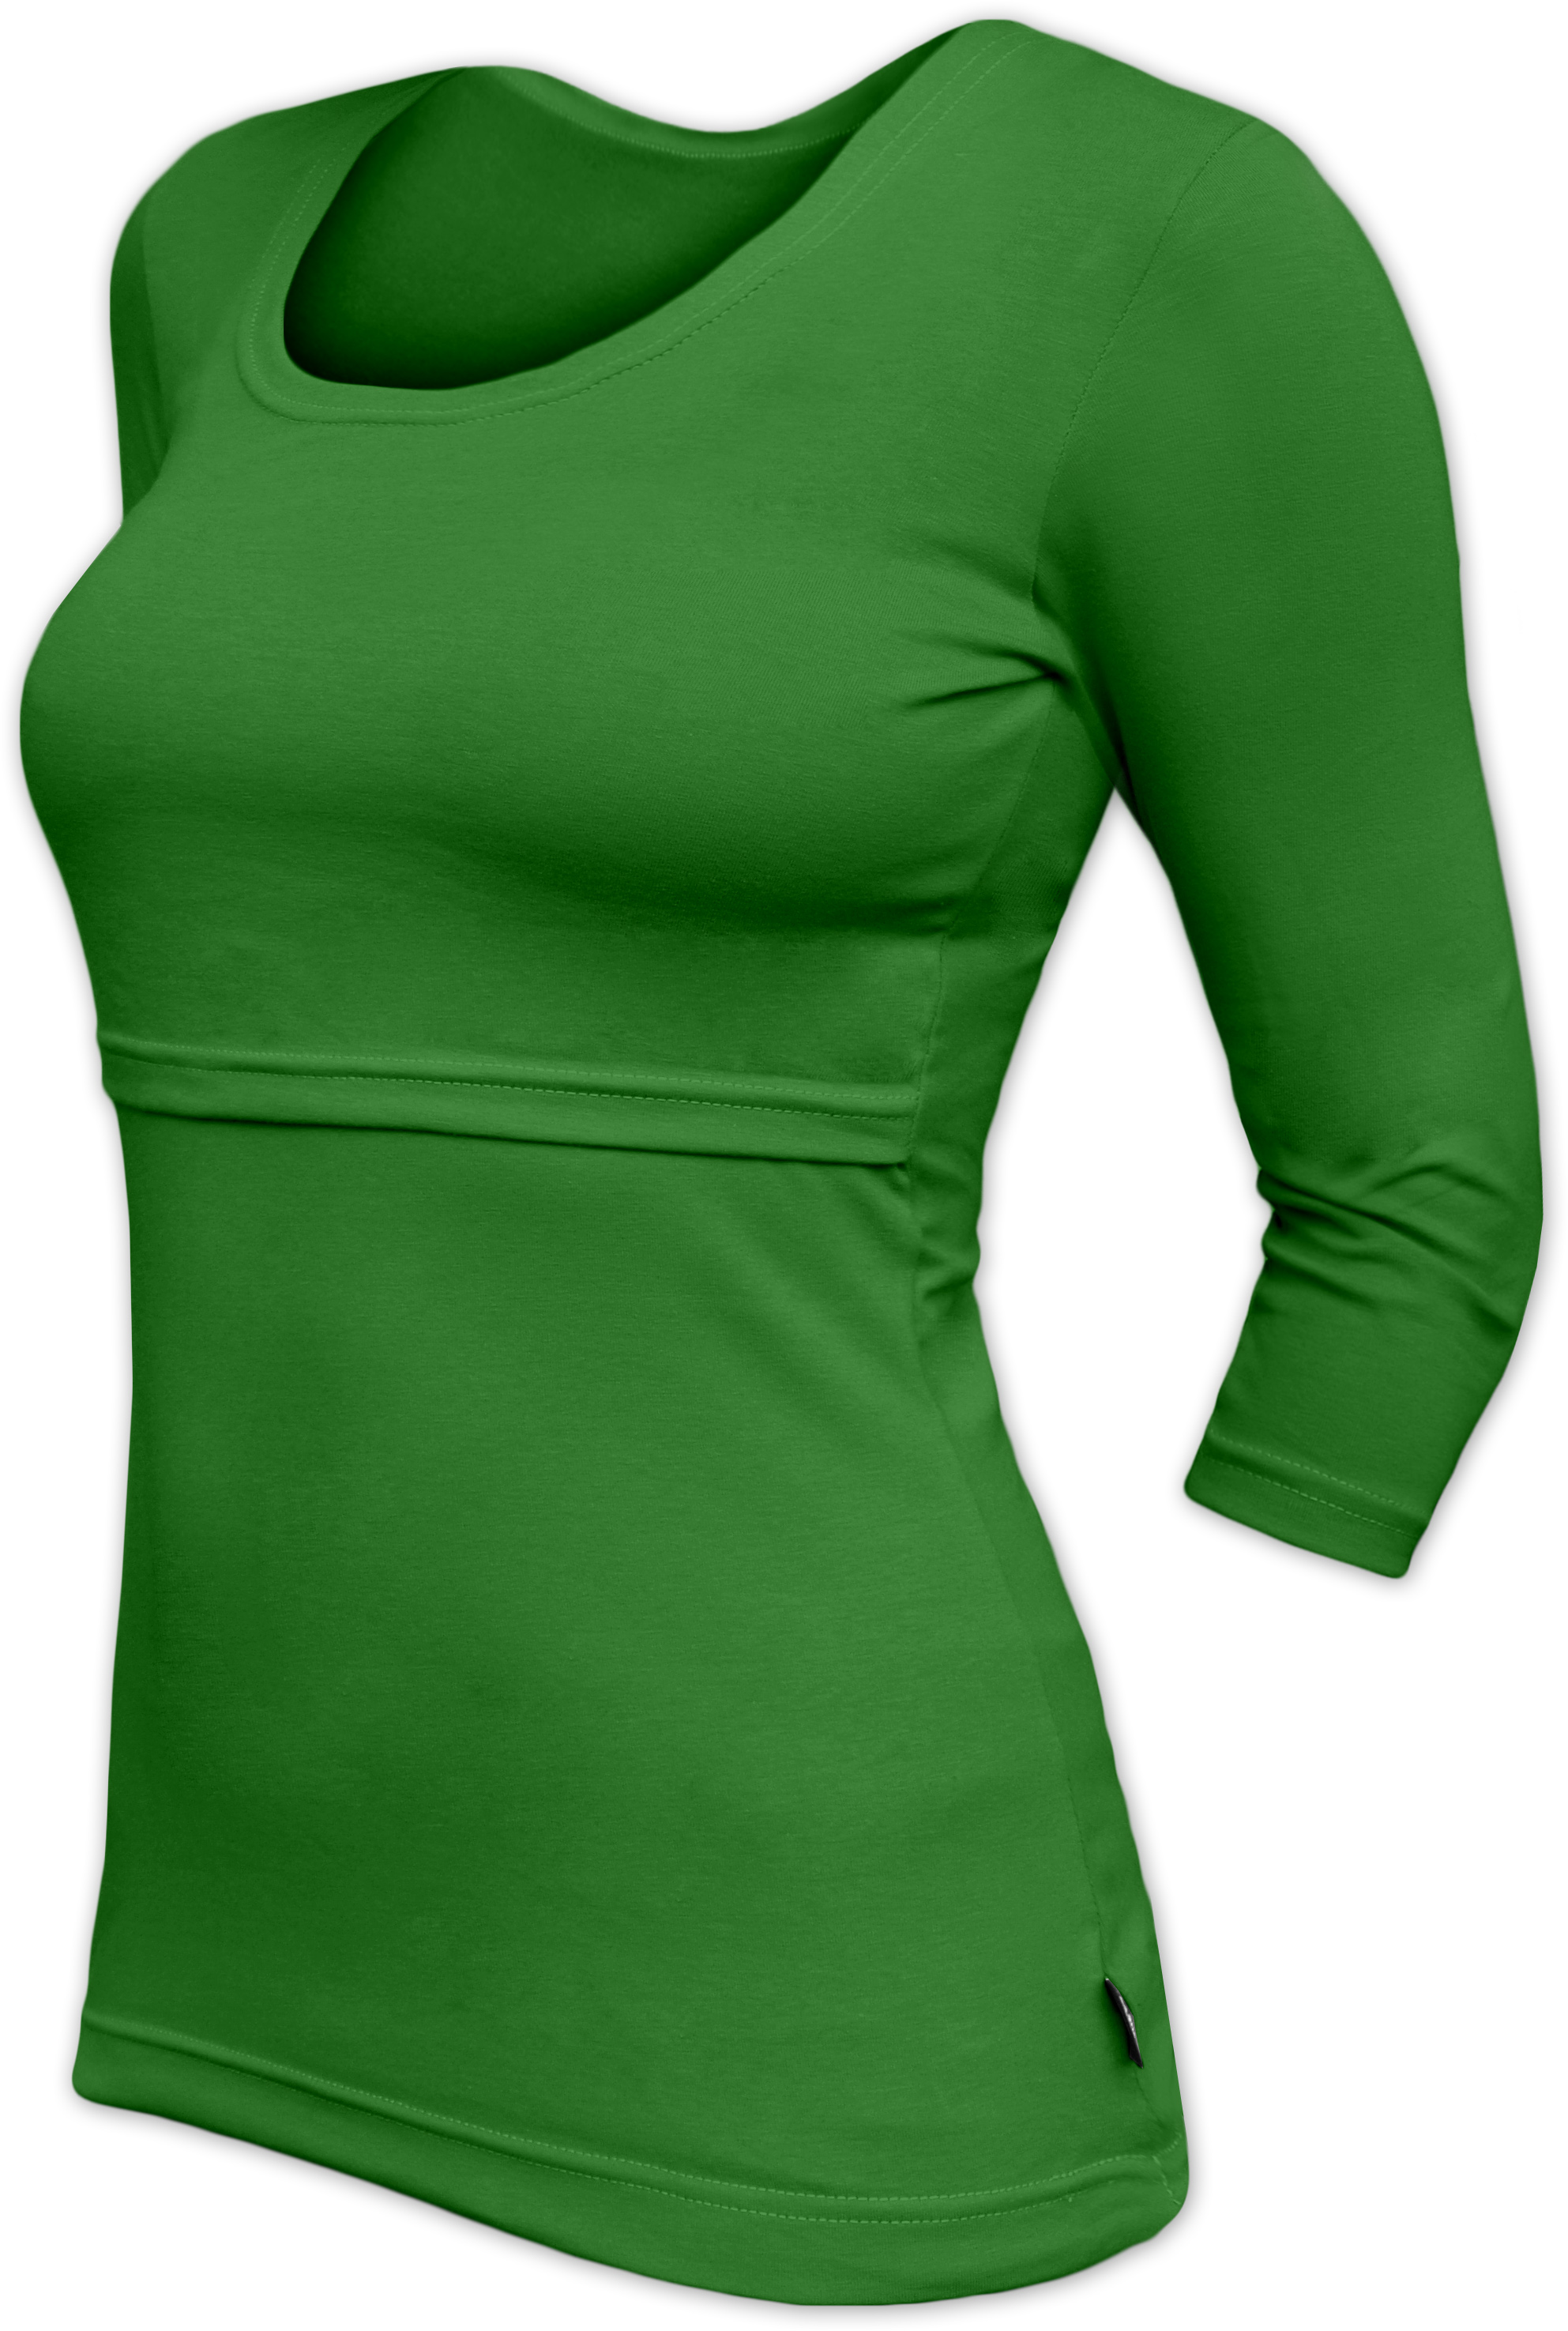 KATERINA- breast-feeding T-shirt 01, 3/4 sleeves, DARK GREEN S/M